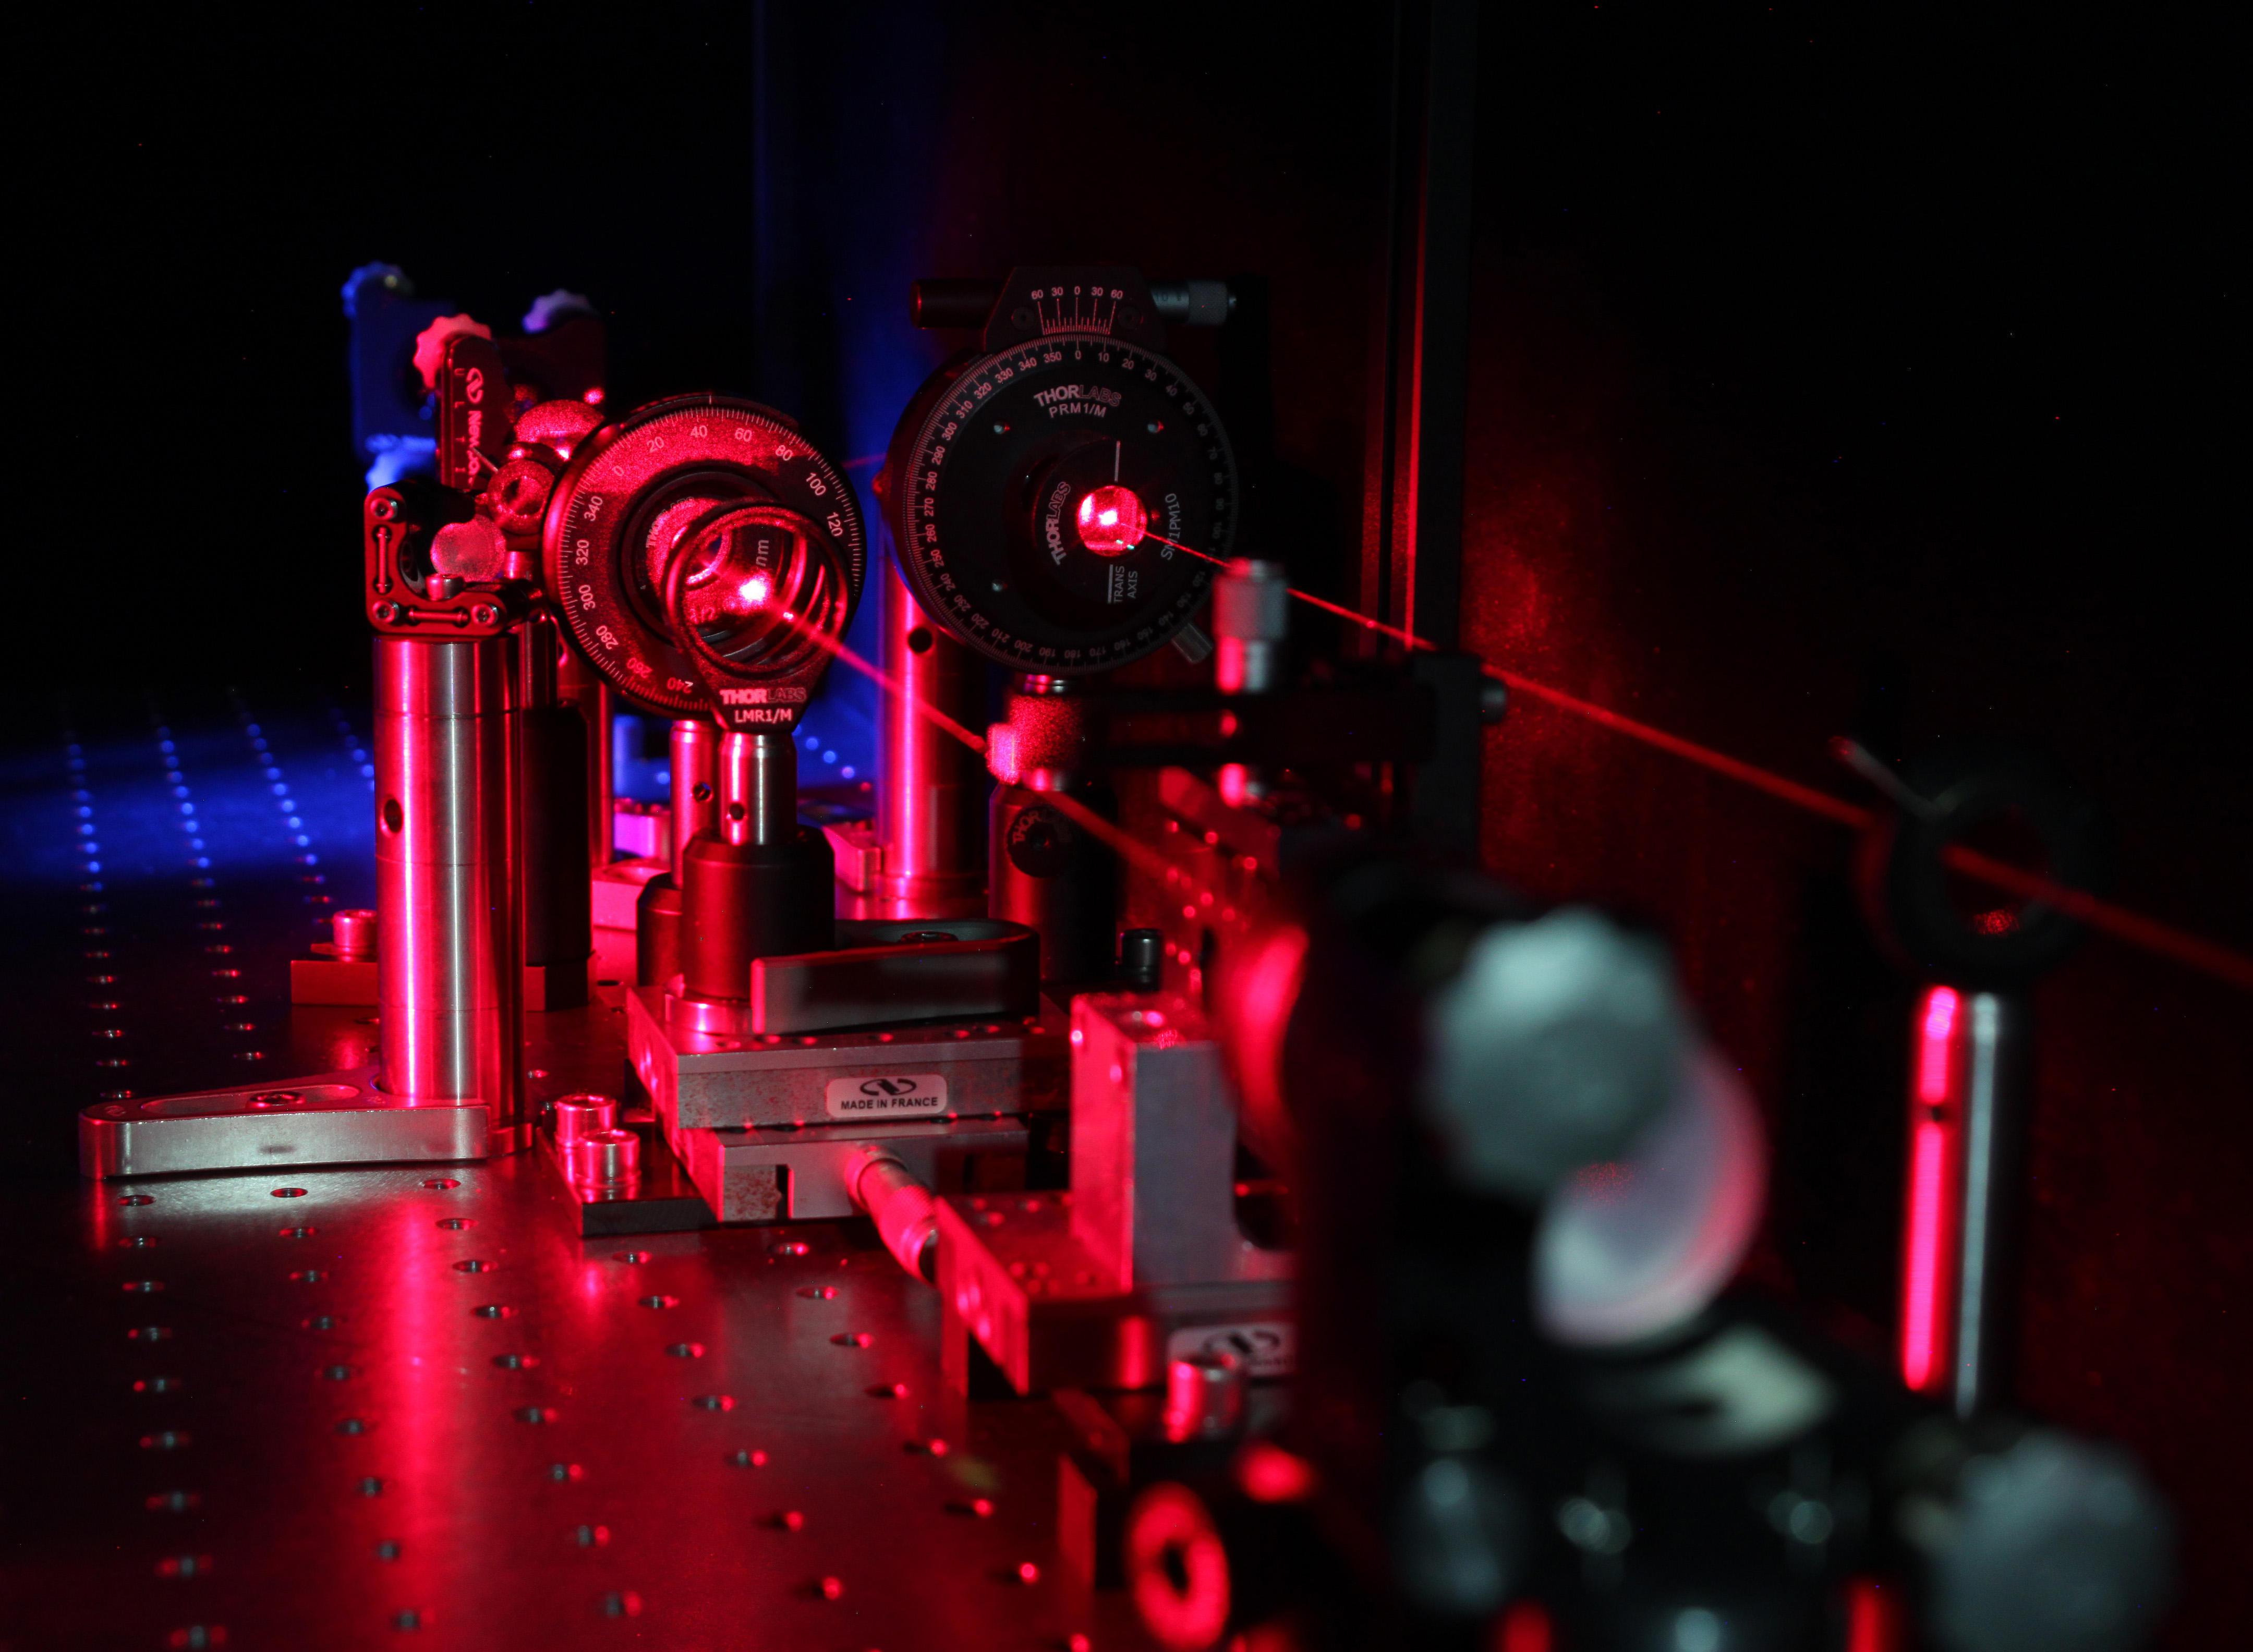 Experimenteller Aufbau zum Nachweis der quantenoptisch erzeugten Photonen